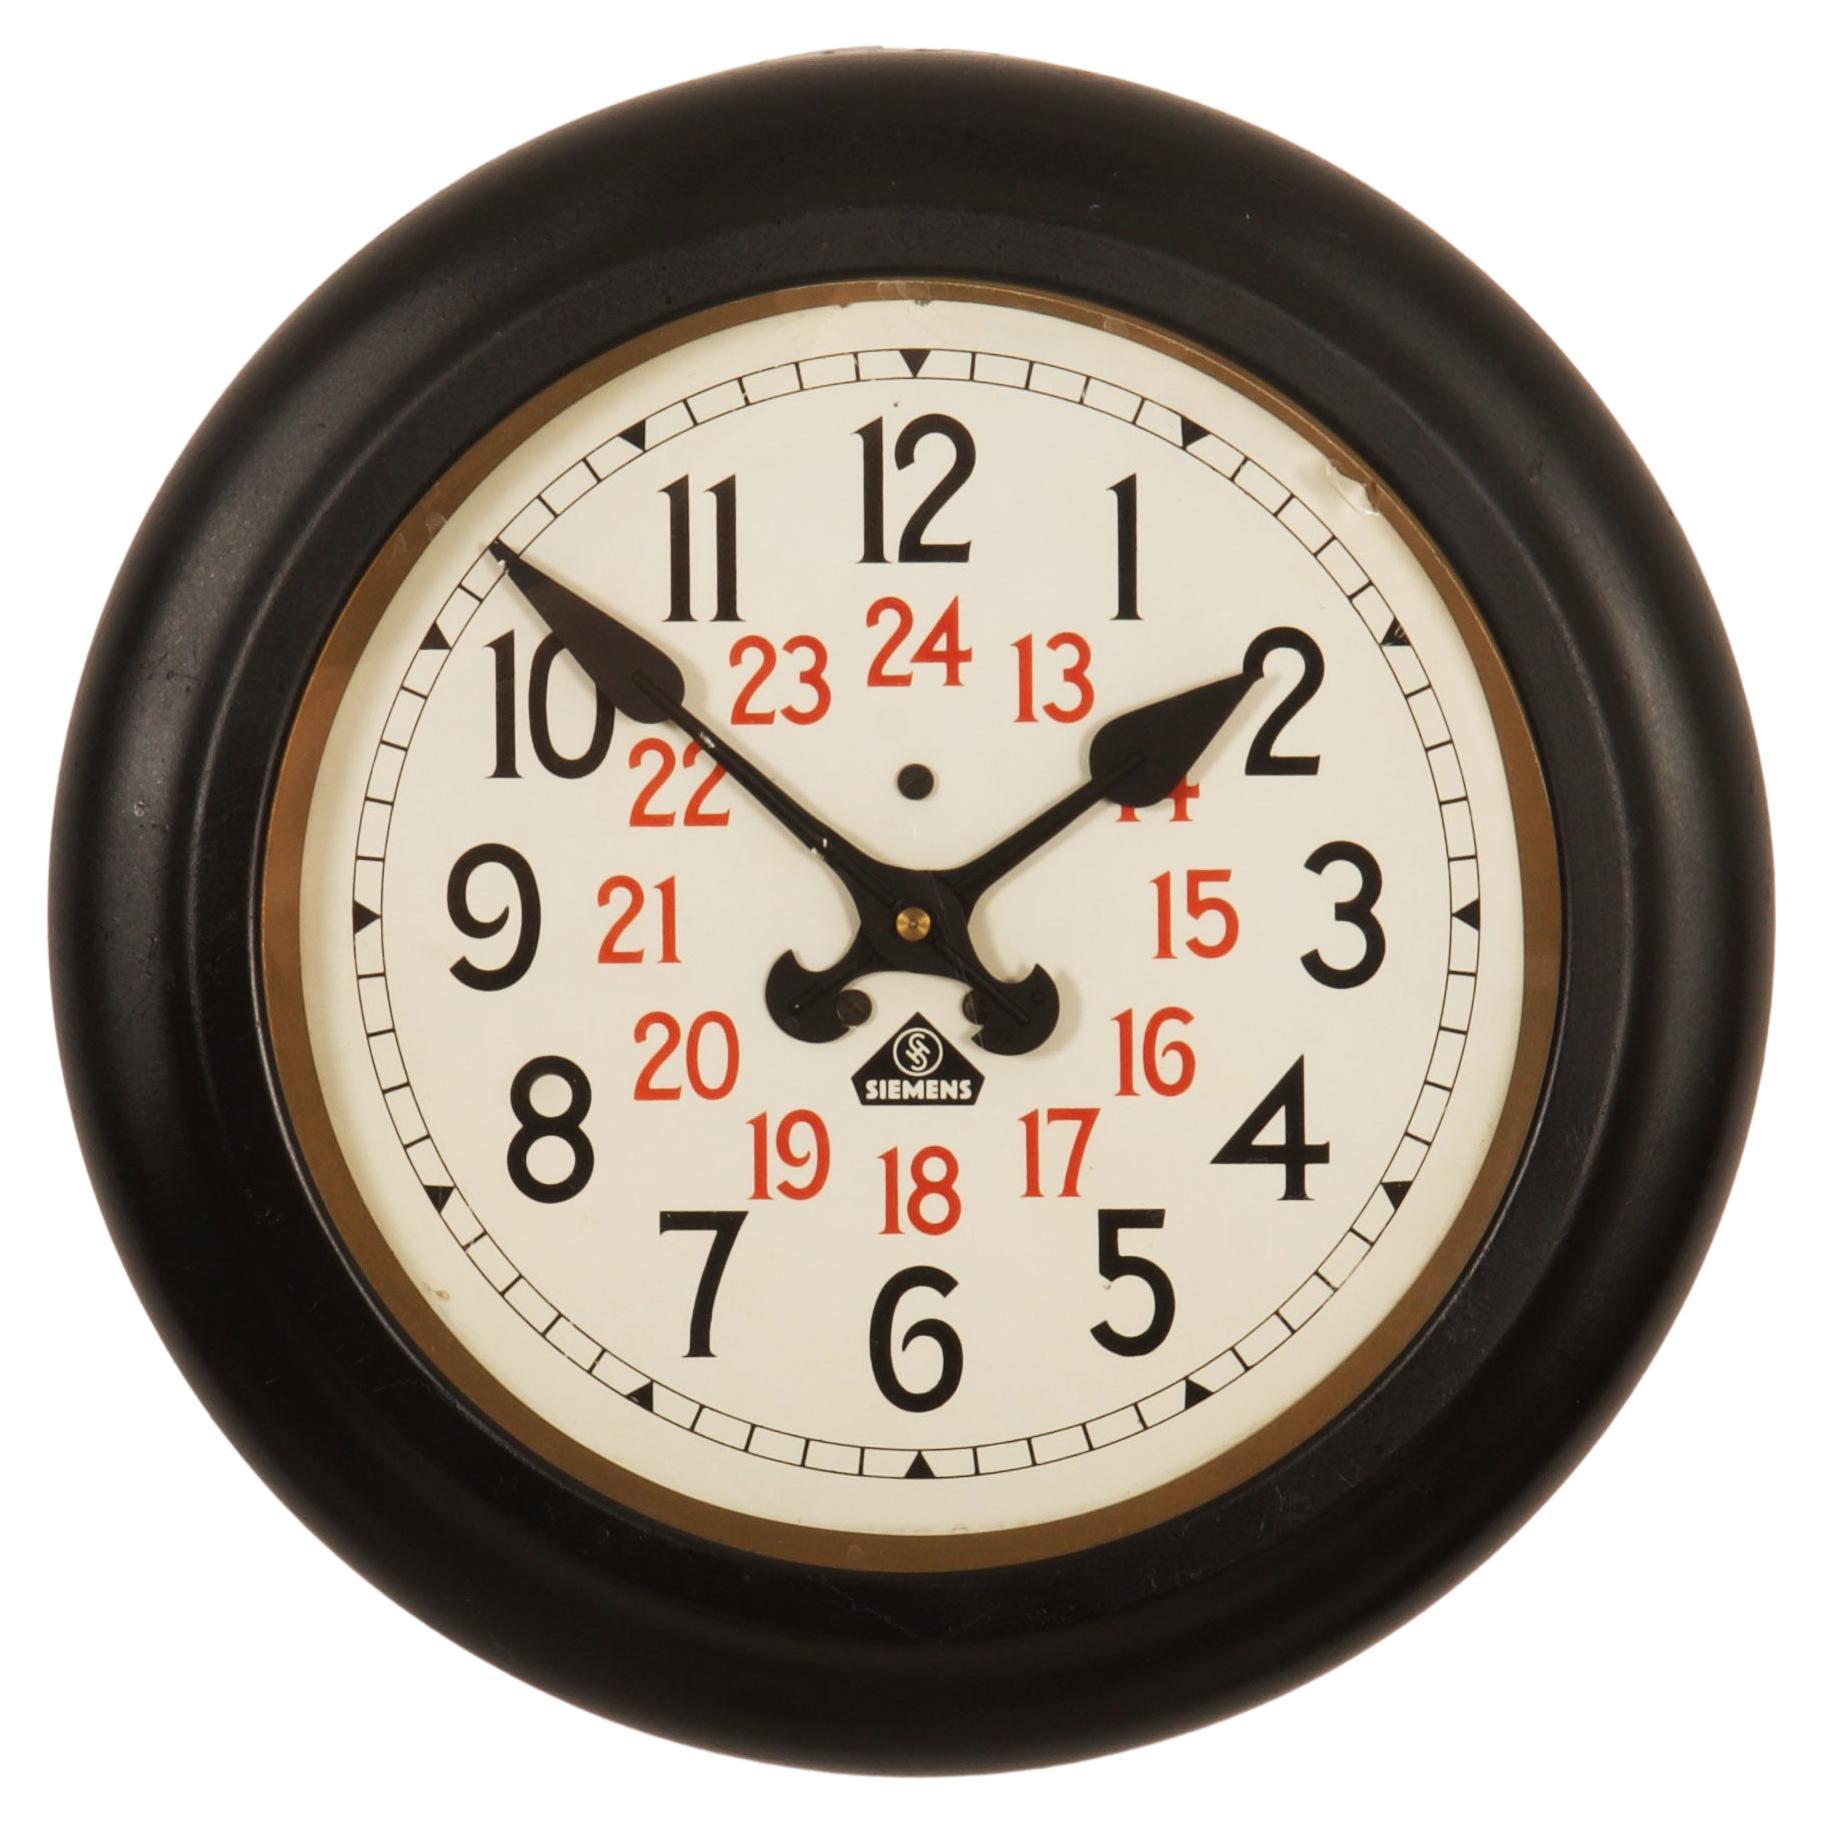 Siemens Halske Bauhaus Factory or Workshop Wall Clock For Sale